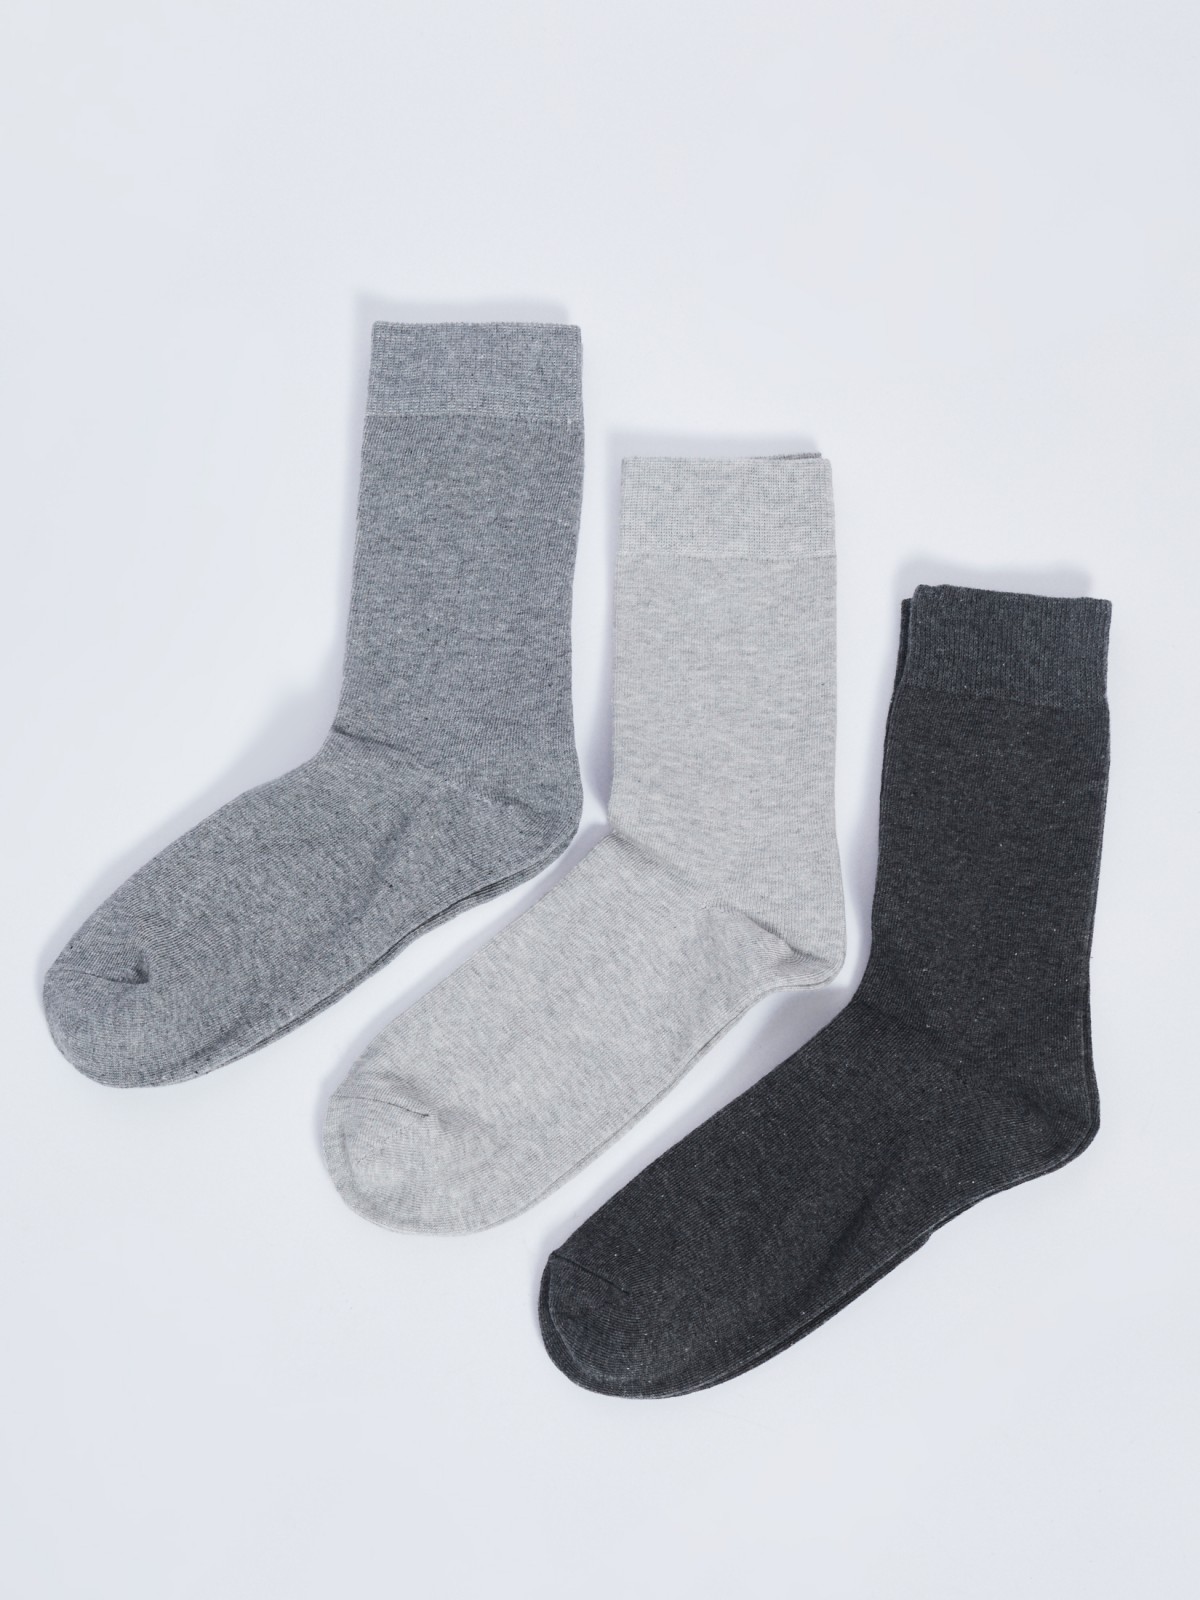 Набор носков (3 пары в комплекте) zolla 01331990Z035, цвет серый, размер 25-27